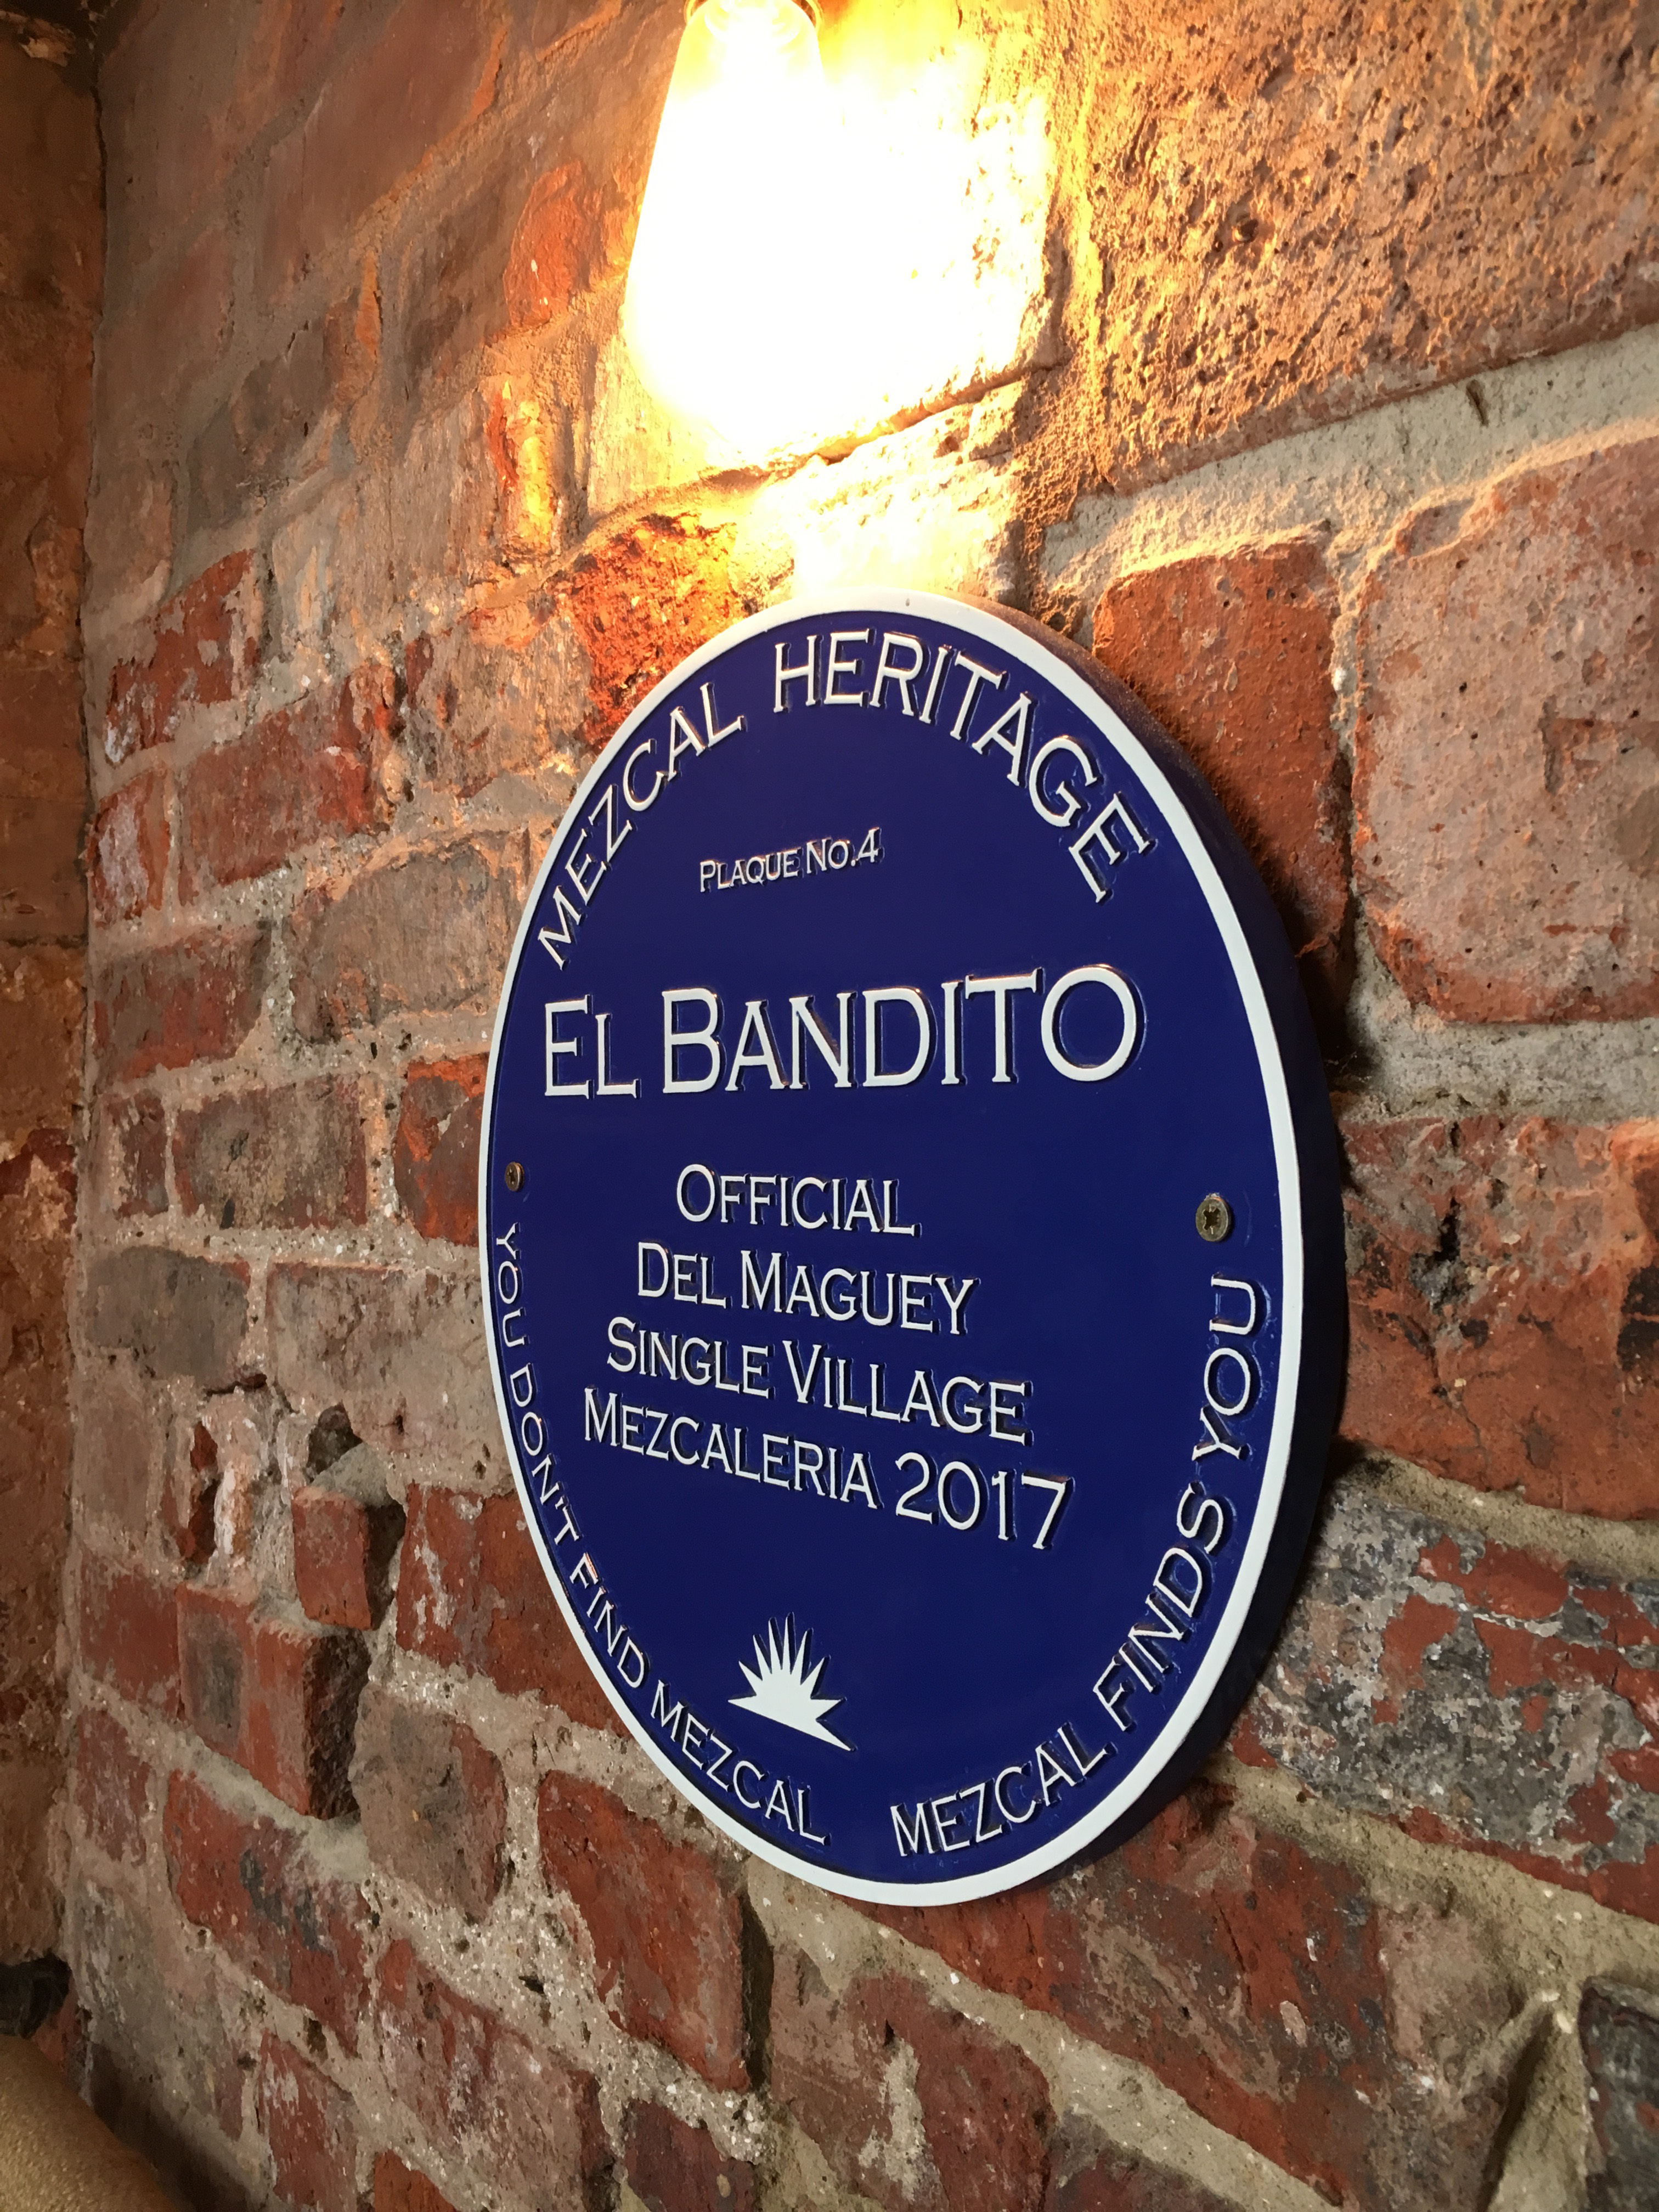 El Bandito is Officially Recognised as a Mezcaleria